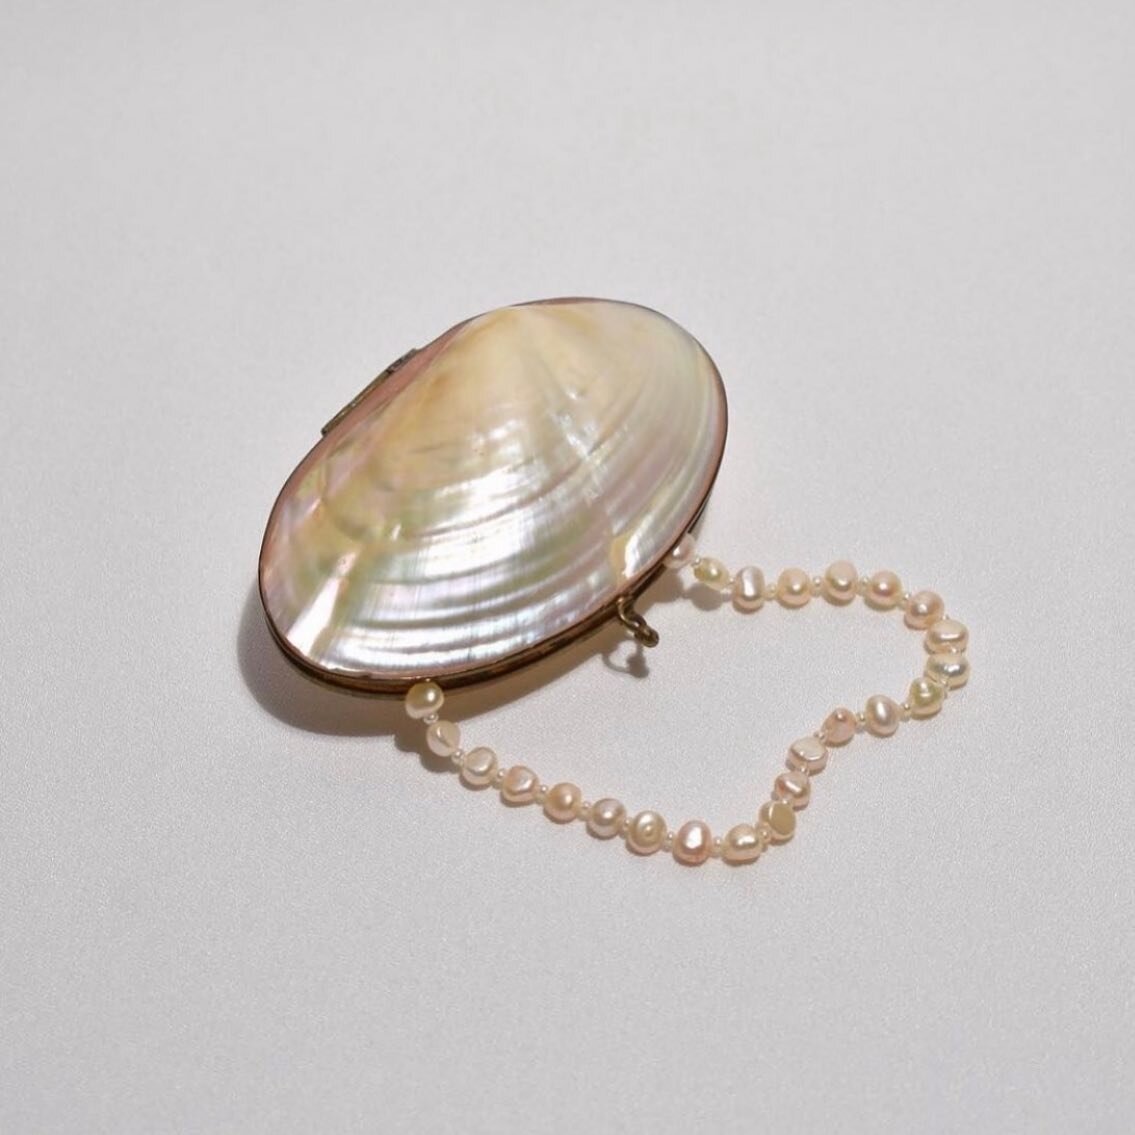 When seashells meet style, magic happens🦪✨